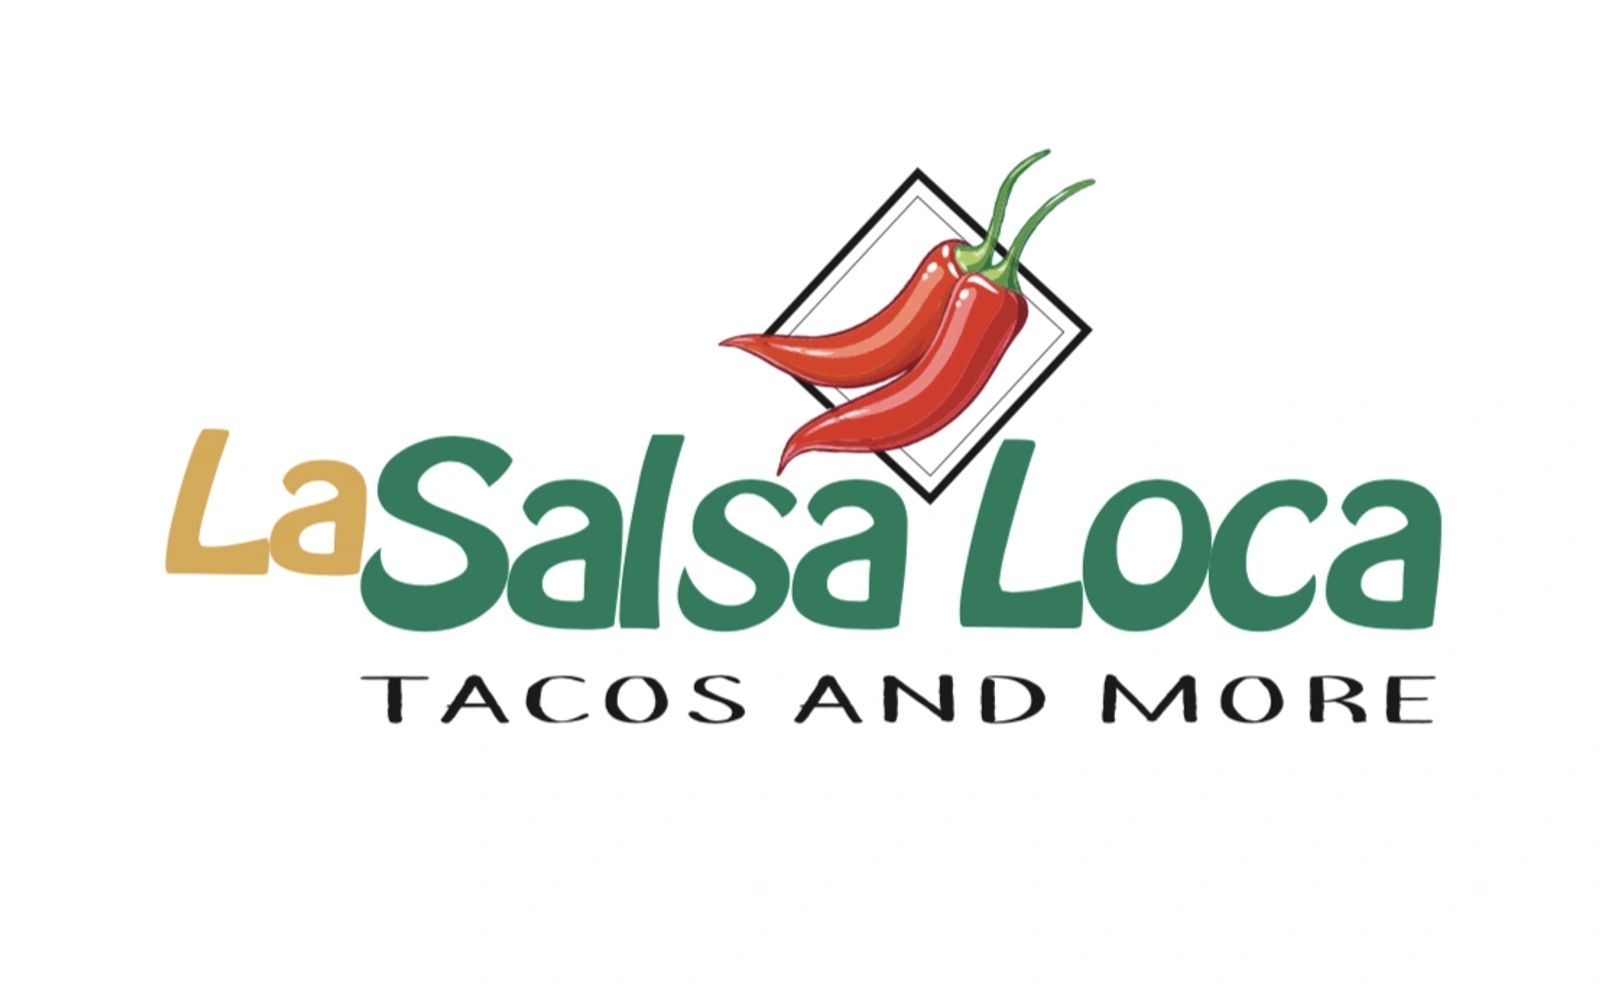 La Salsa Loca Tacos and More